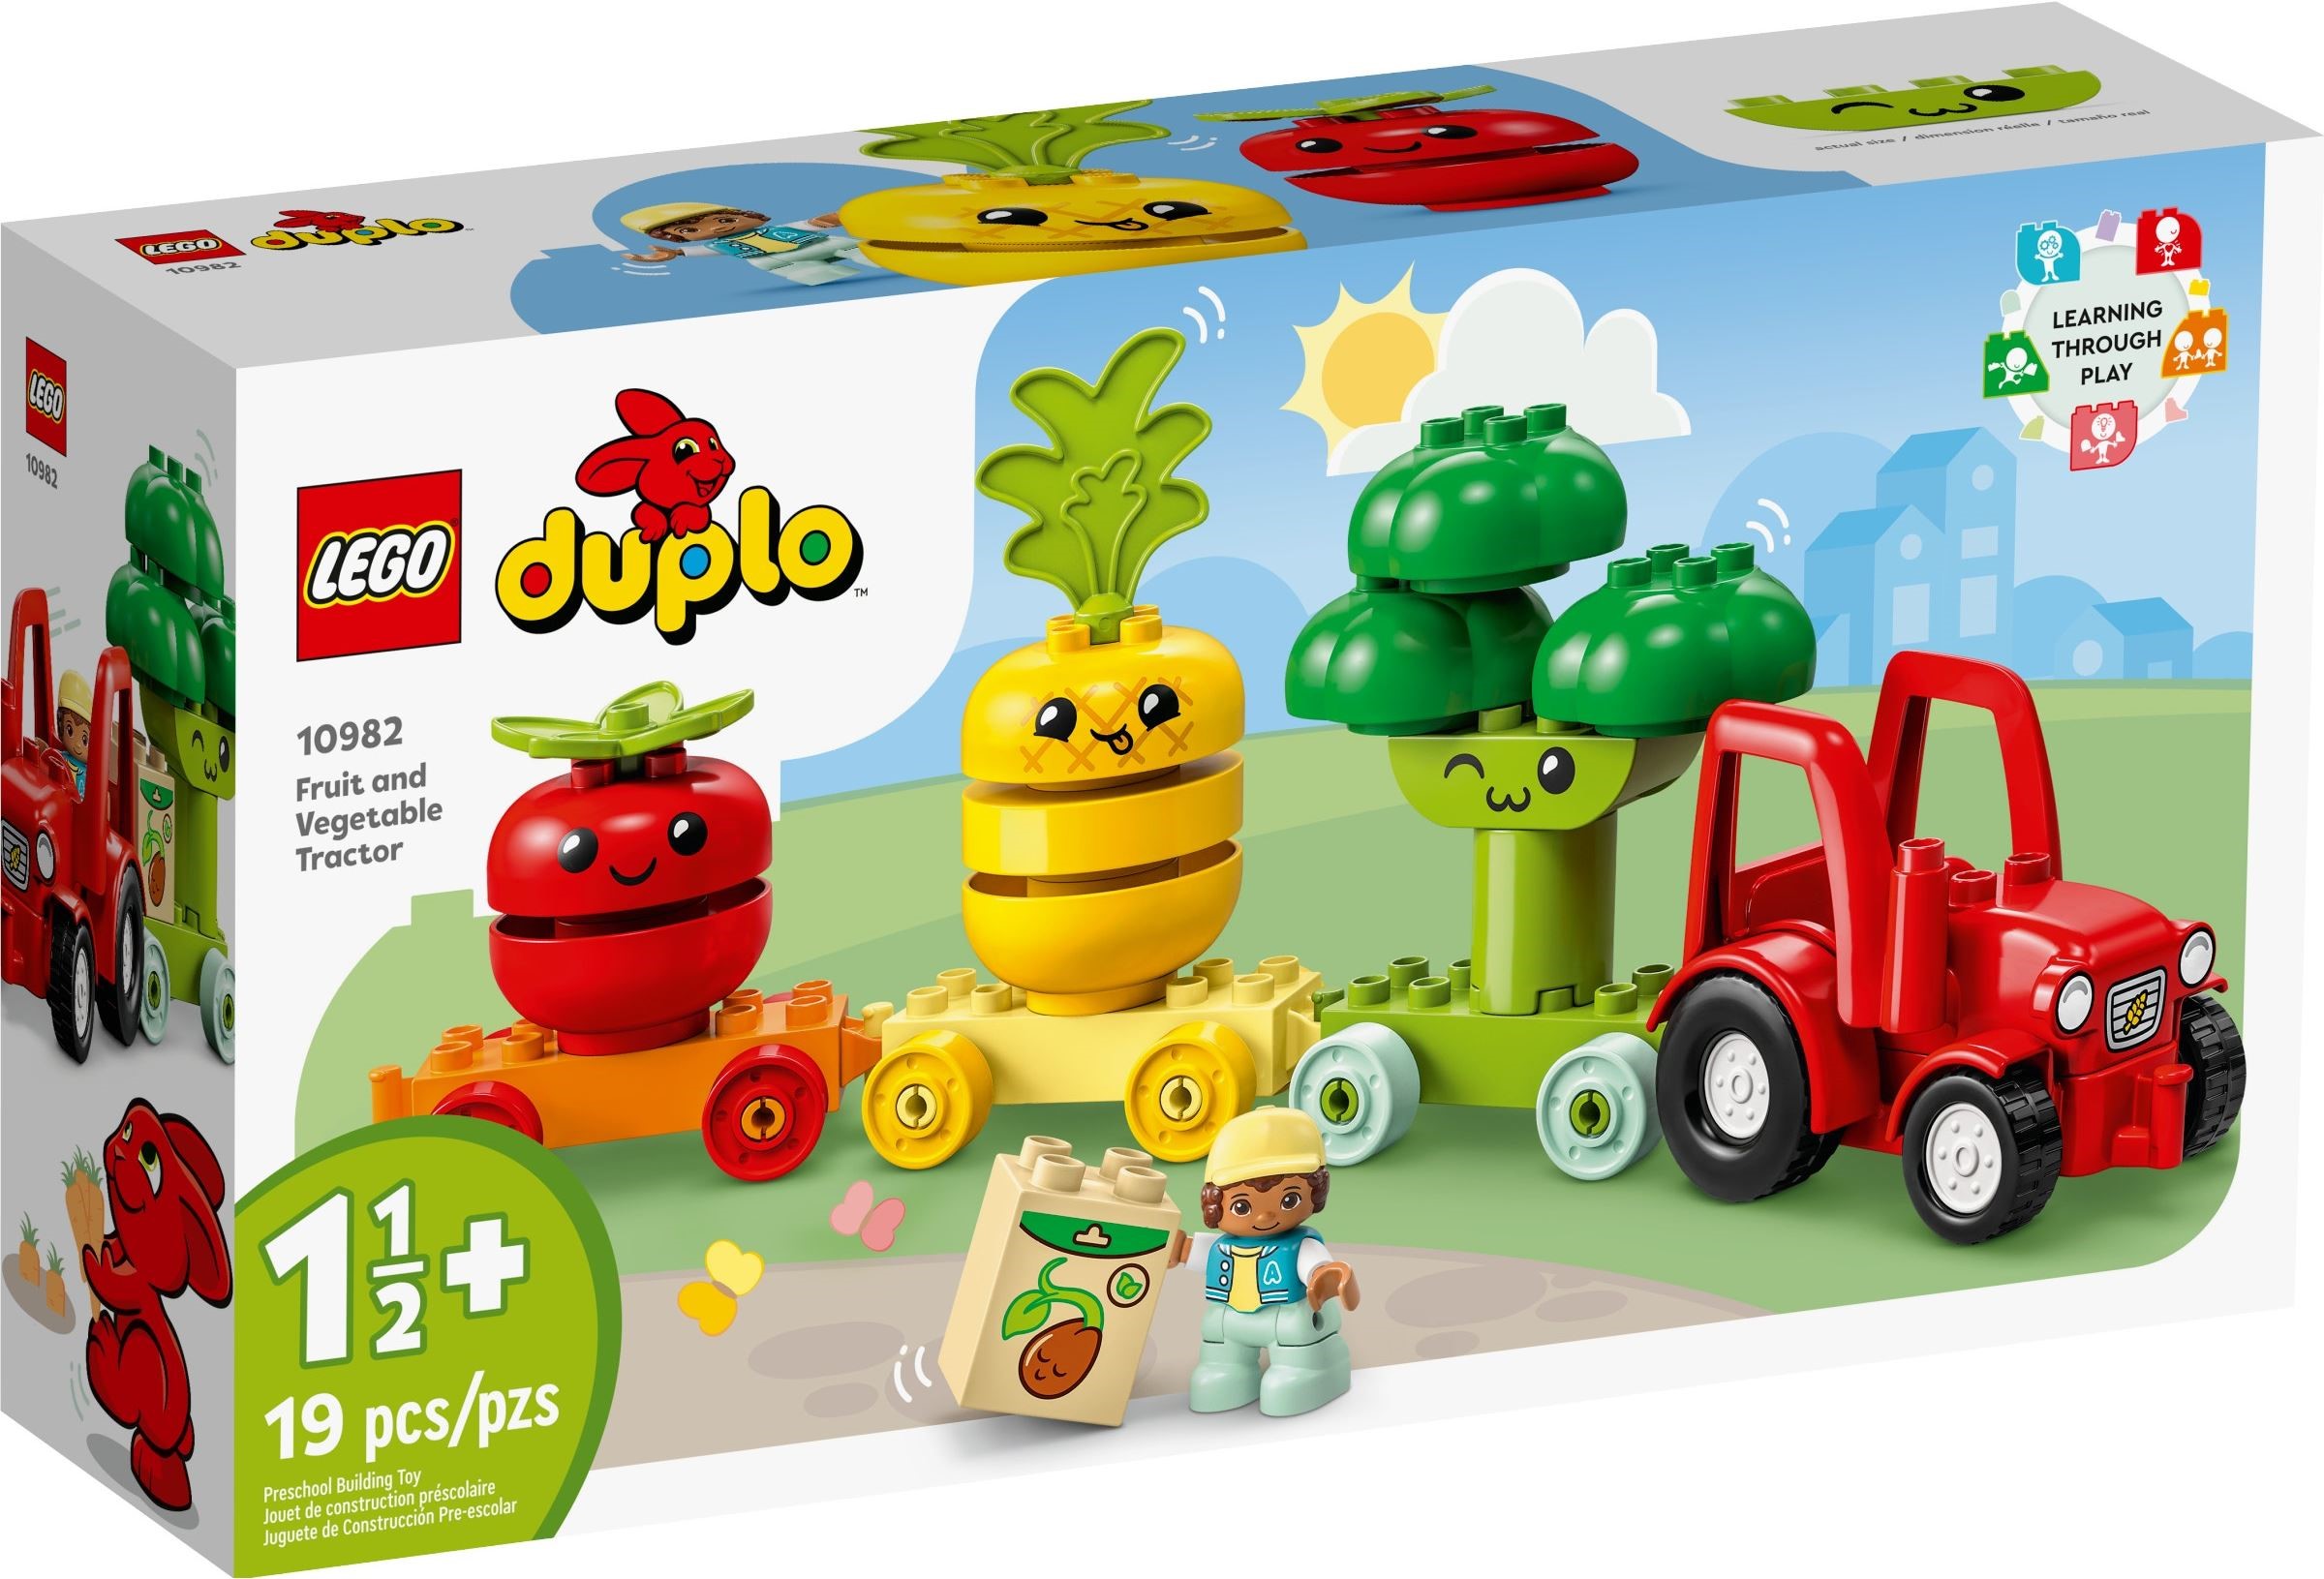 10982 Fruit and Vegetable Tractor | Brickipedia | Fandom